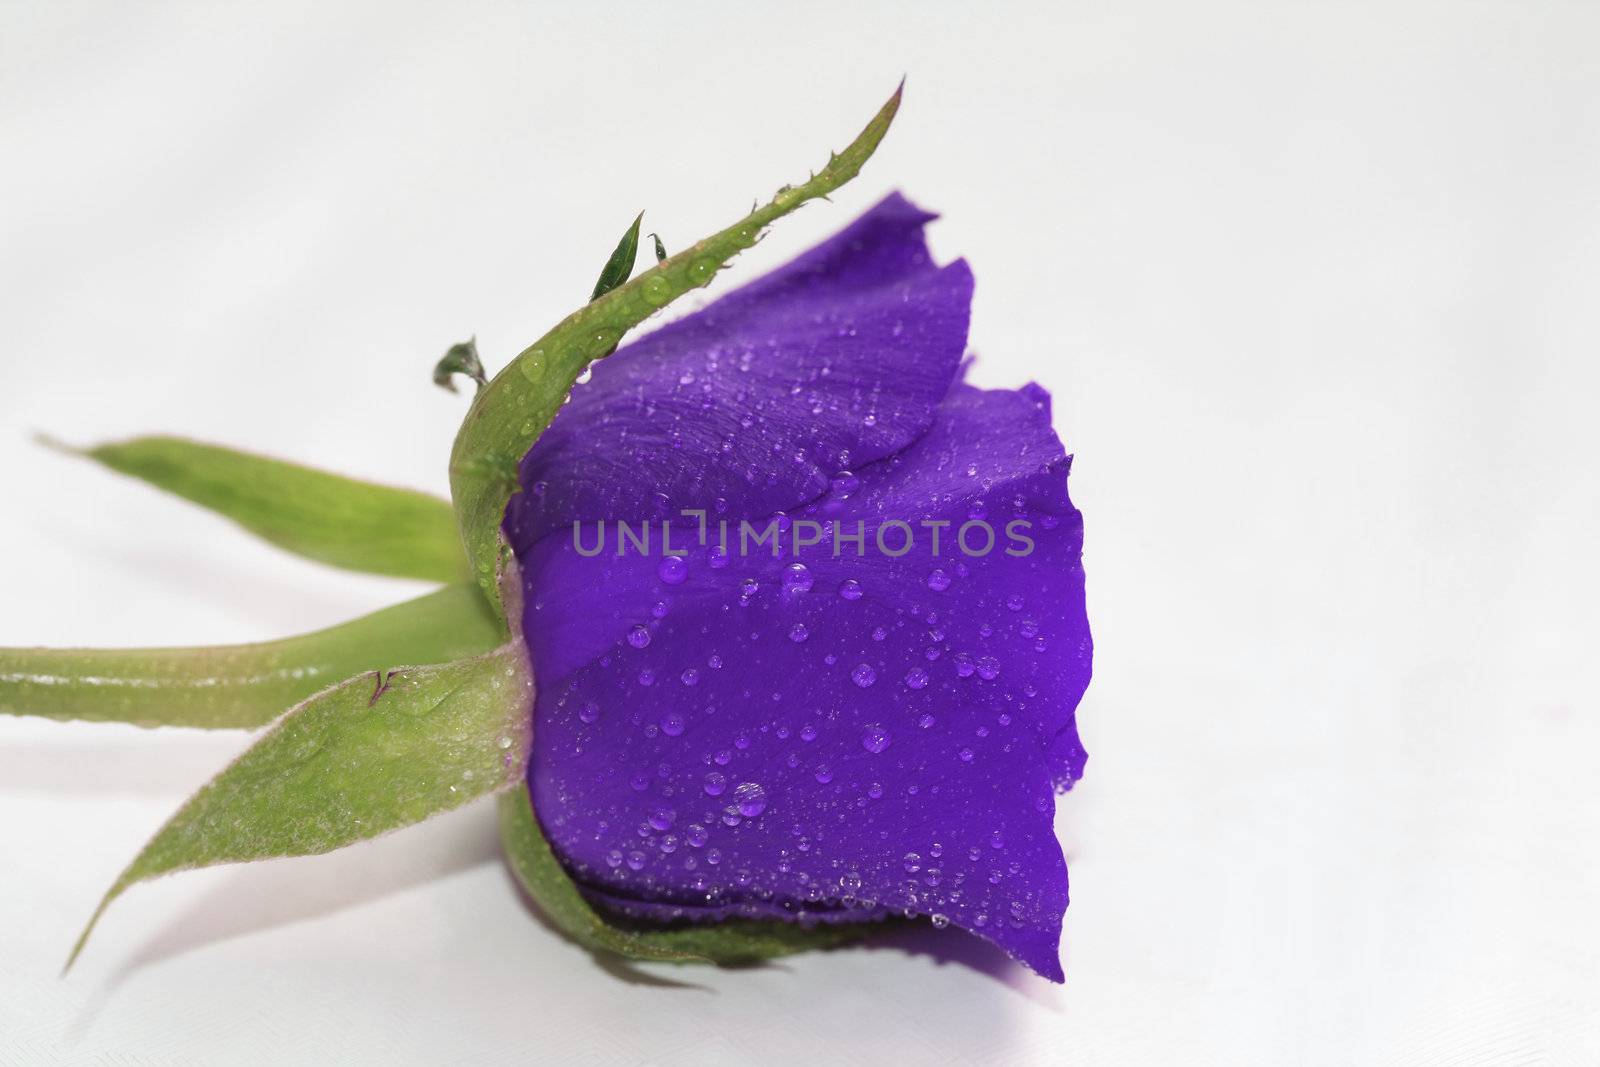 Waterdrops on a single purple rose, overwhite